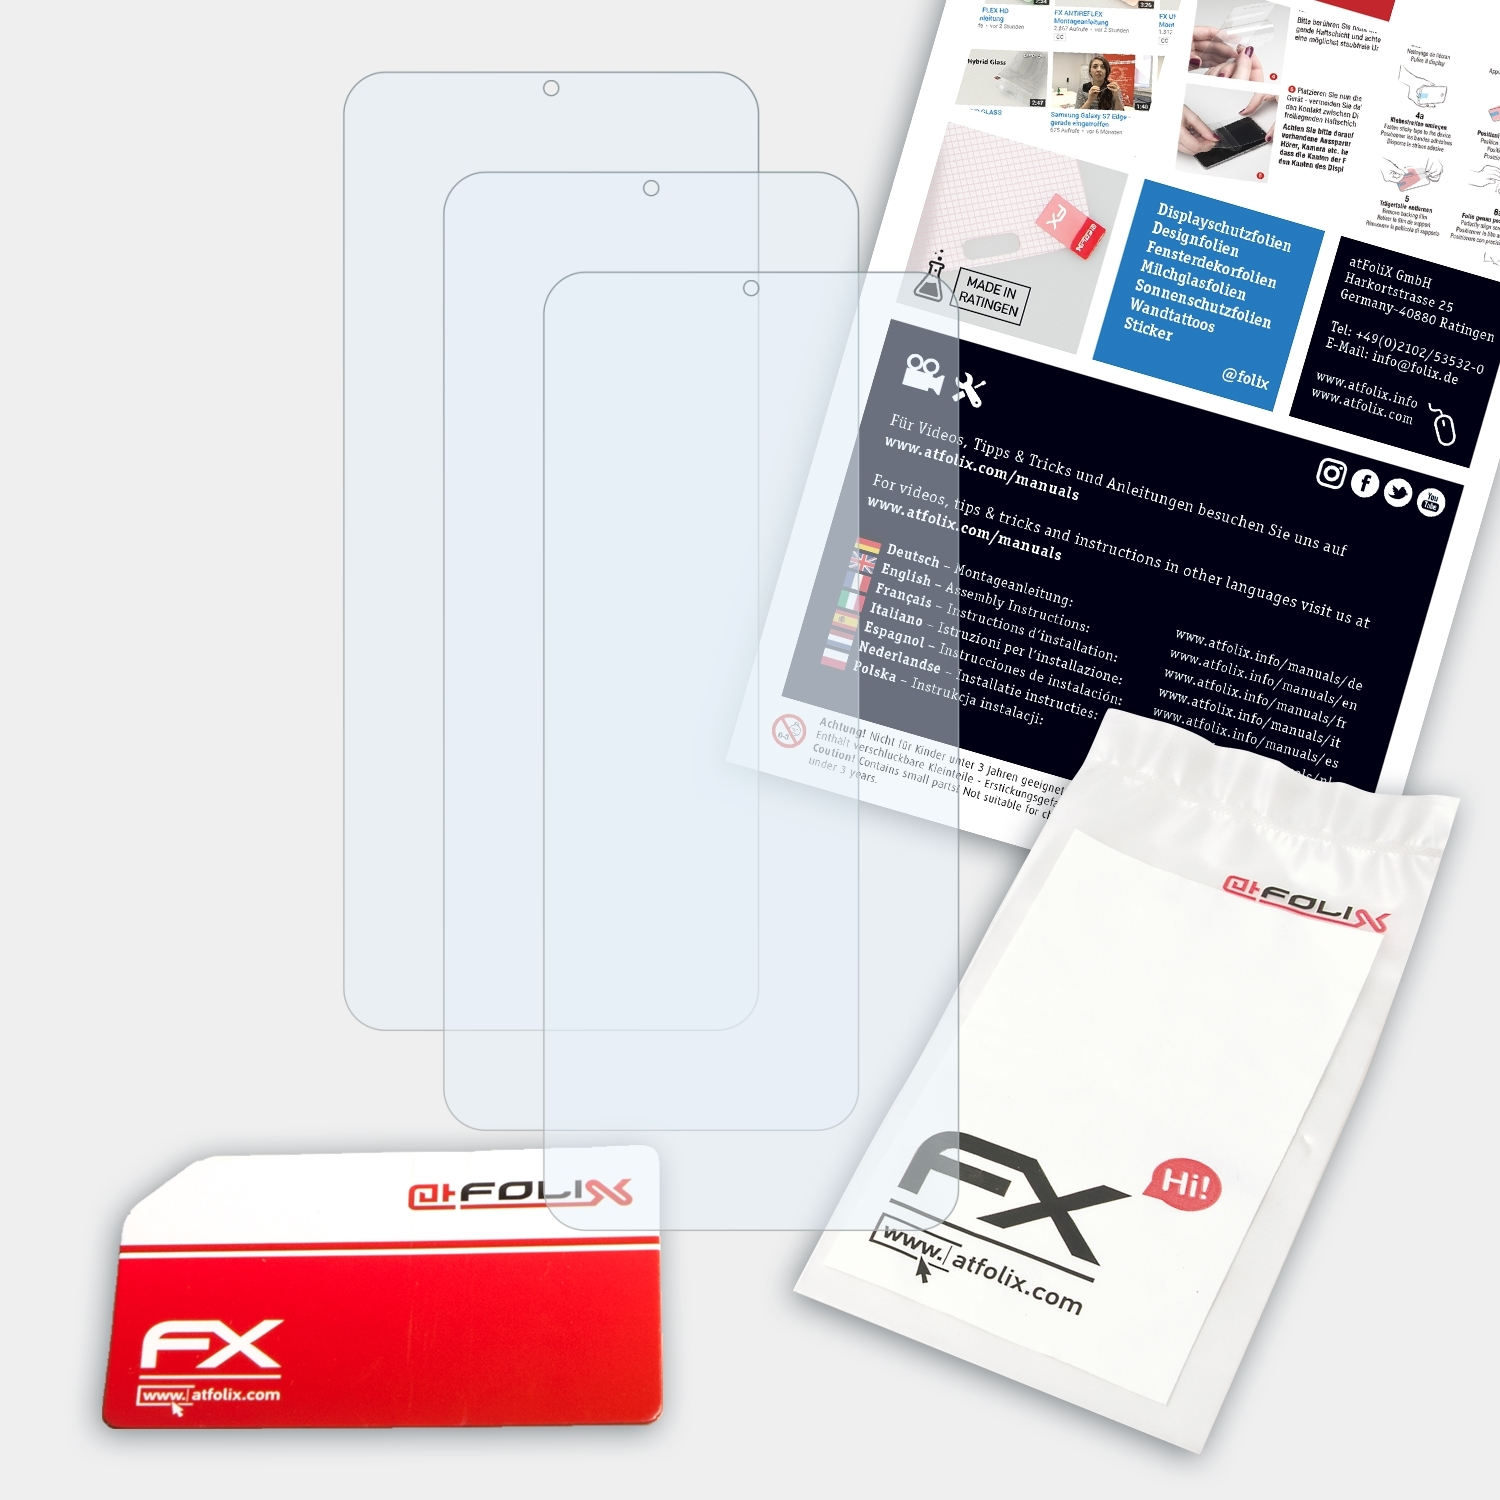 ATFOLIX 3x Smart Infinix 6) Displayschutz(für FX-Clear